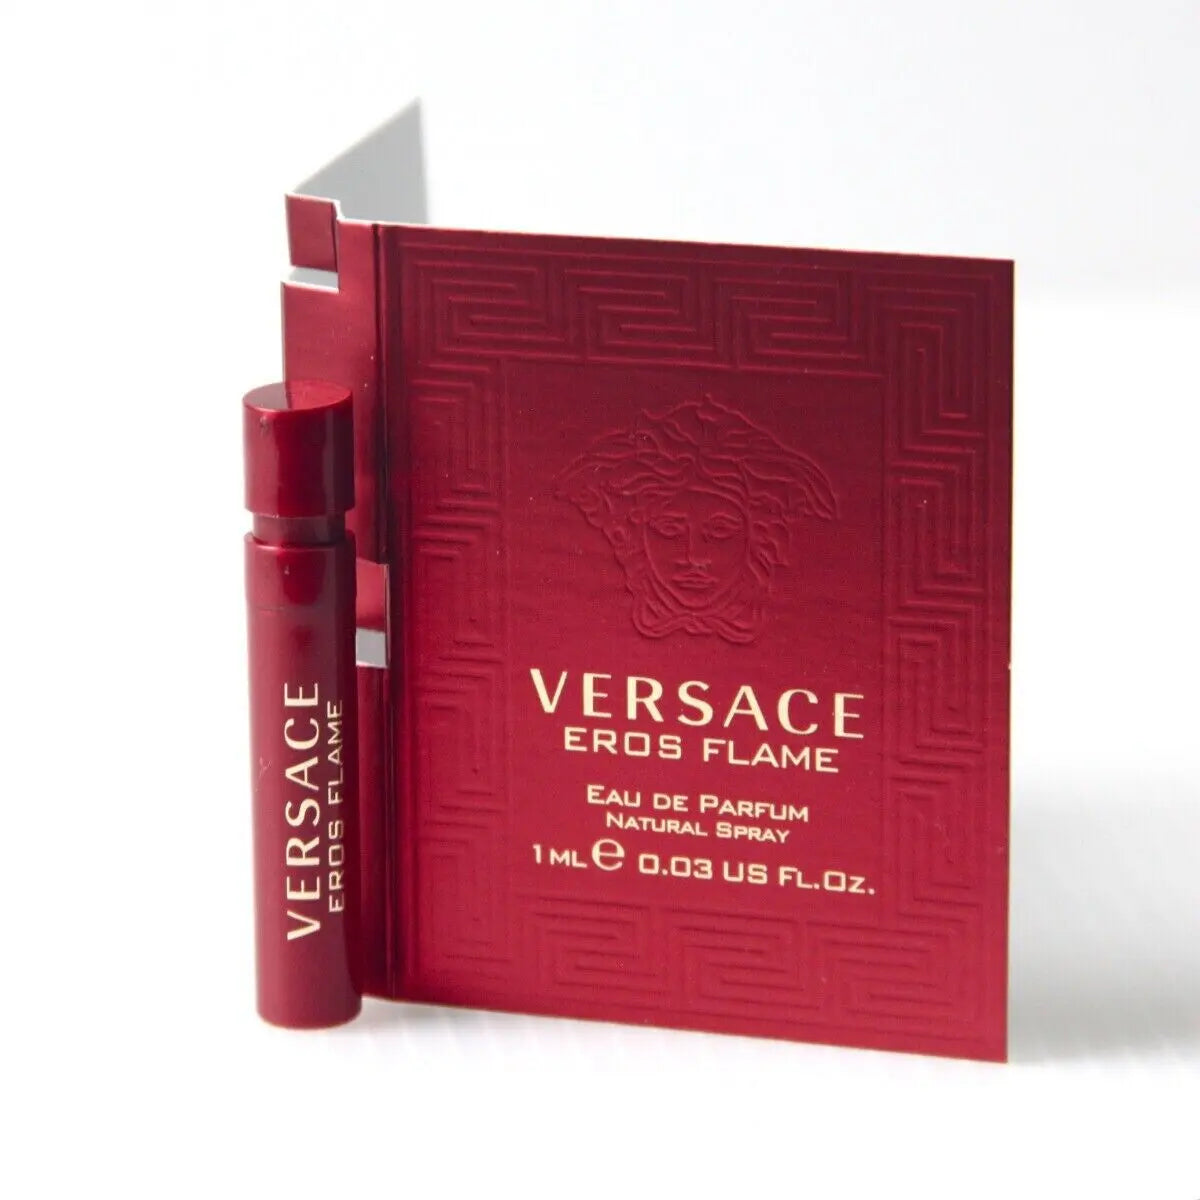 Versace Eros Flame EDP Sample 1ml Male Fragrance sample